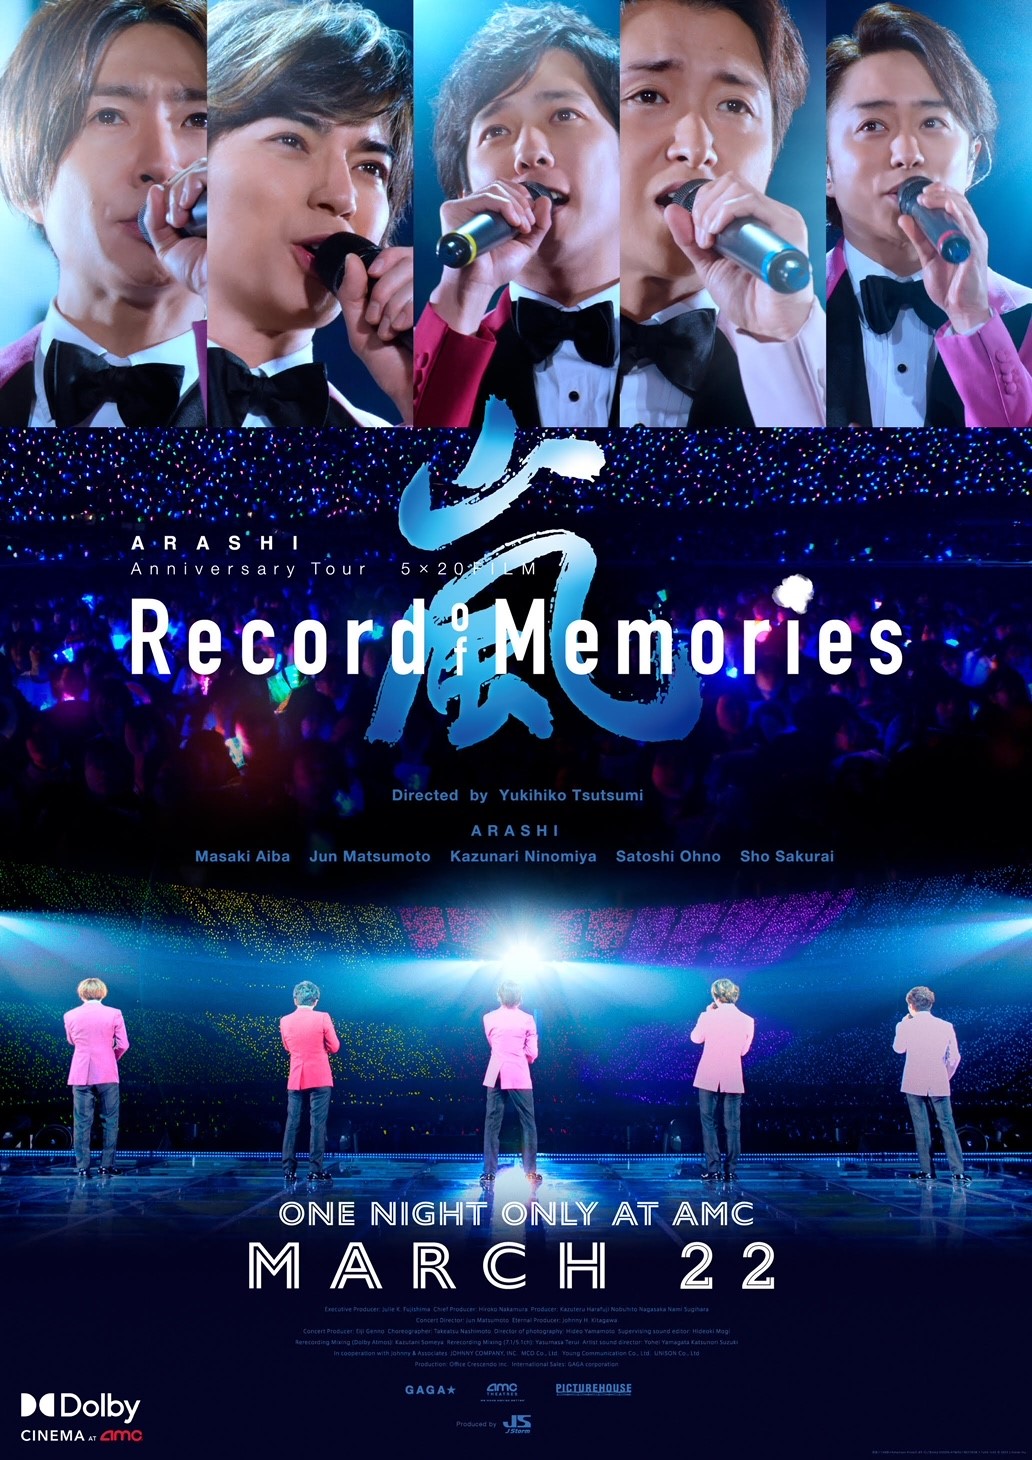 ARASHI Anniversary Tour 5x20 FILM: Record of Memories at an AMC 